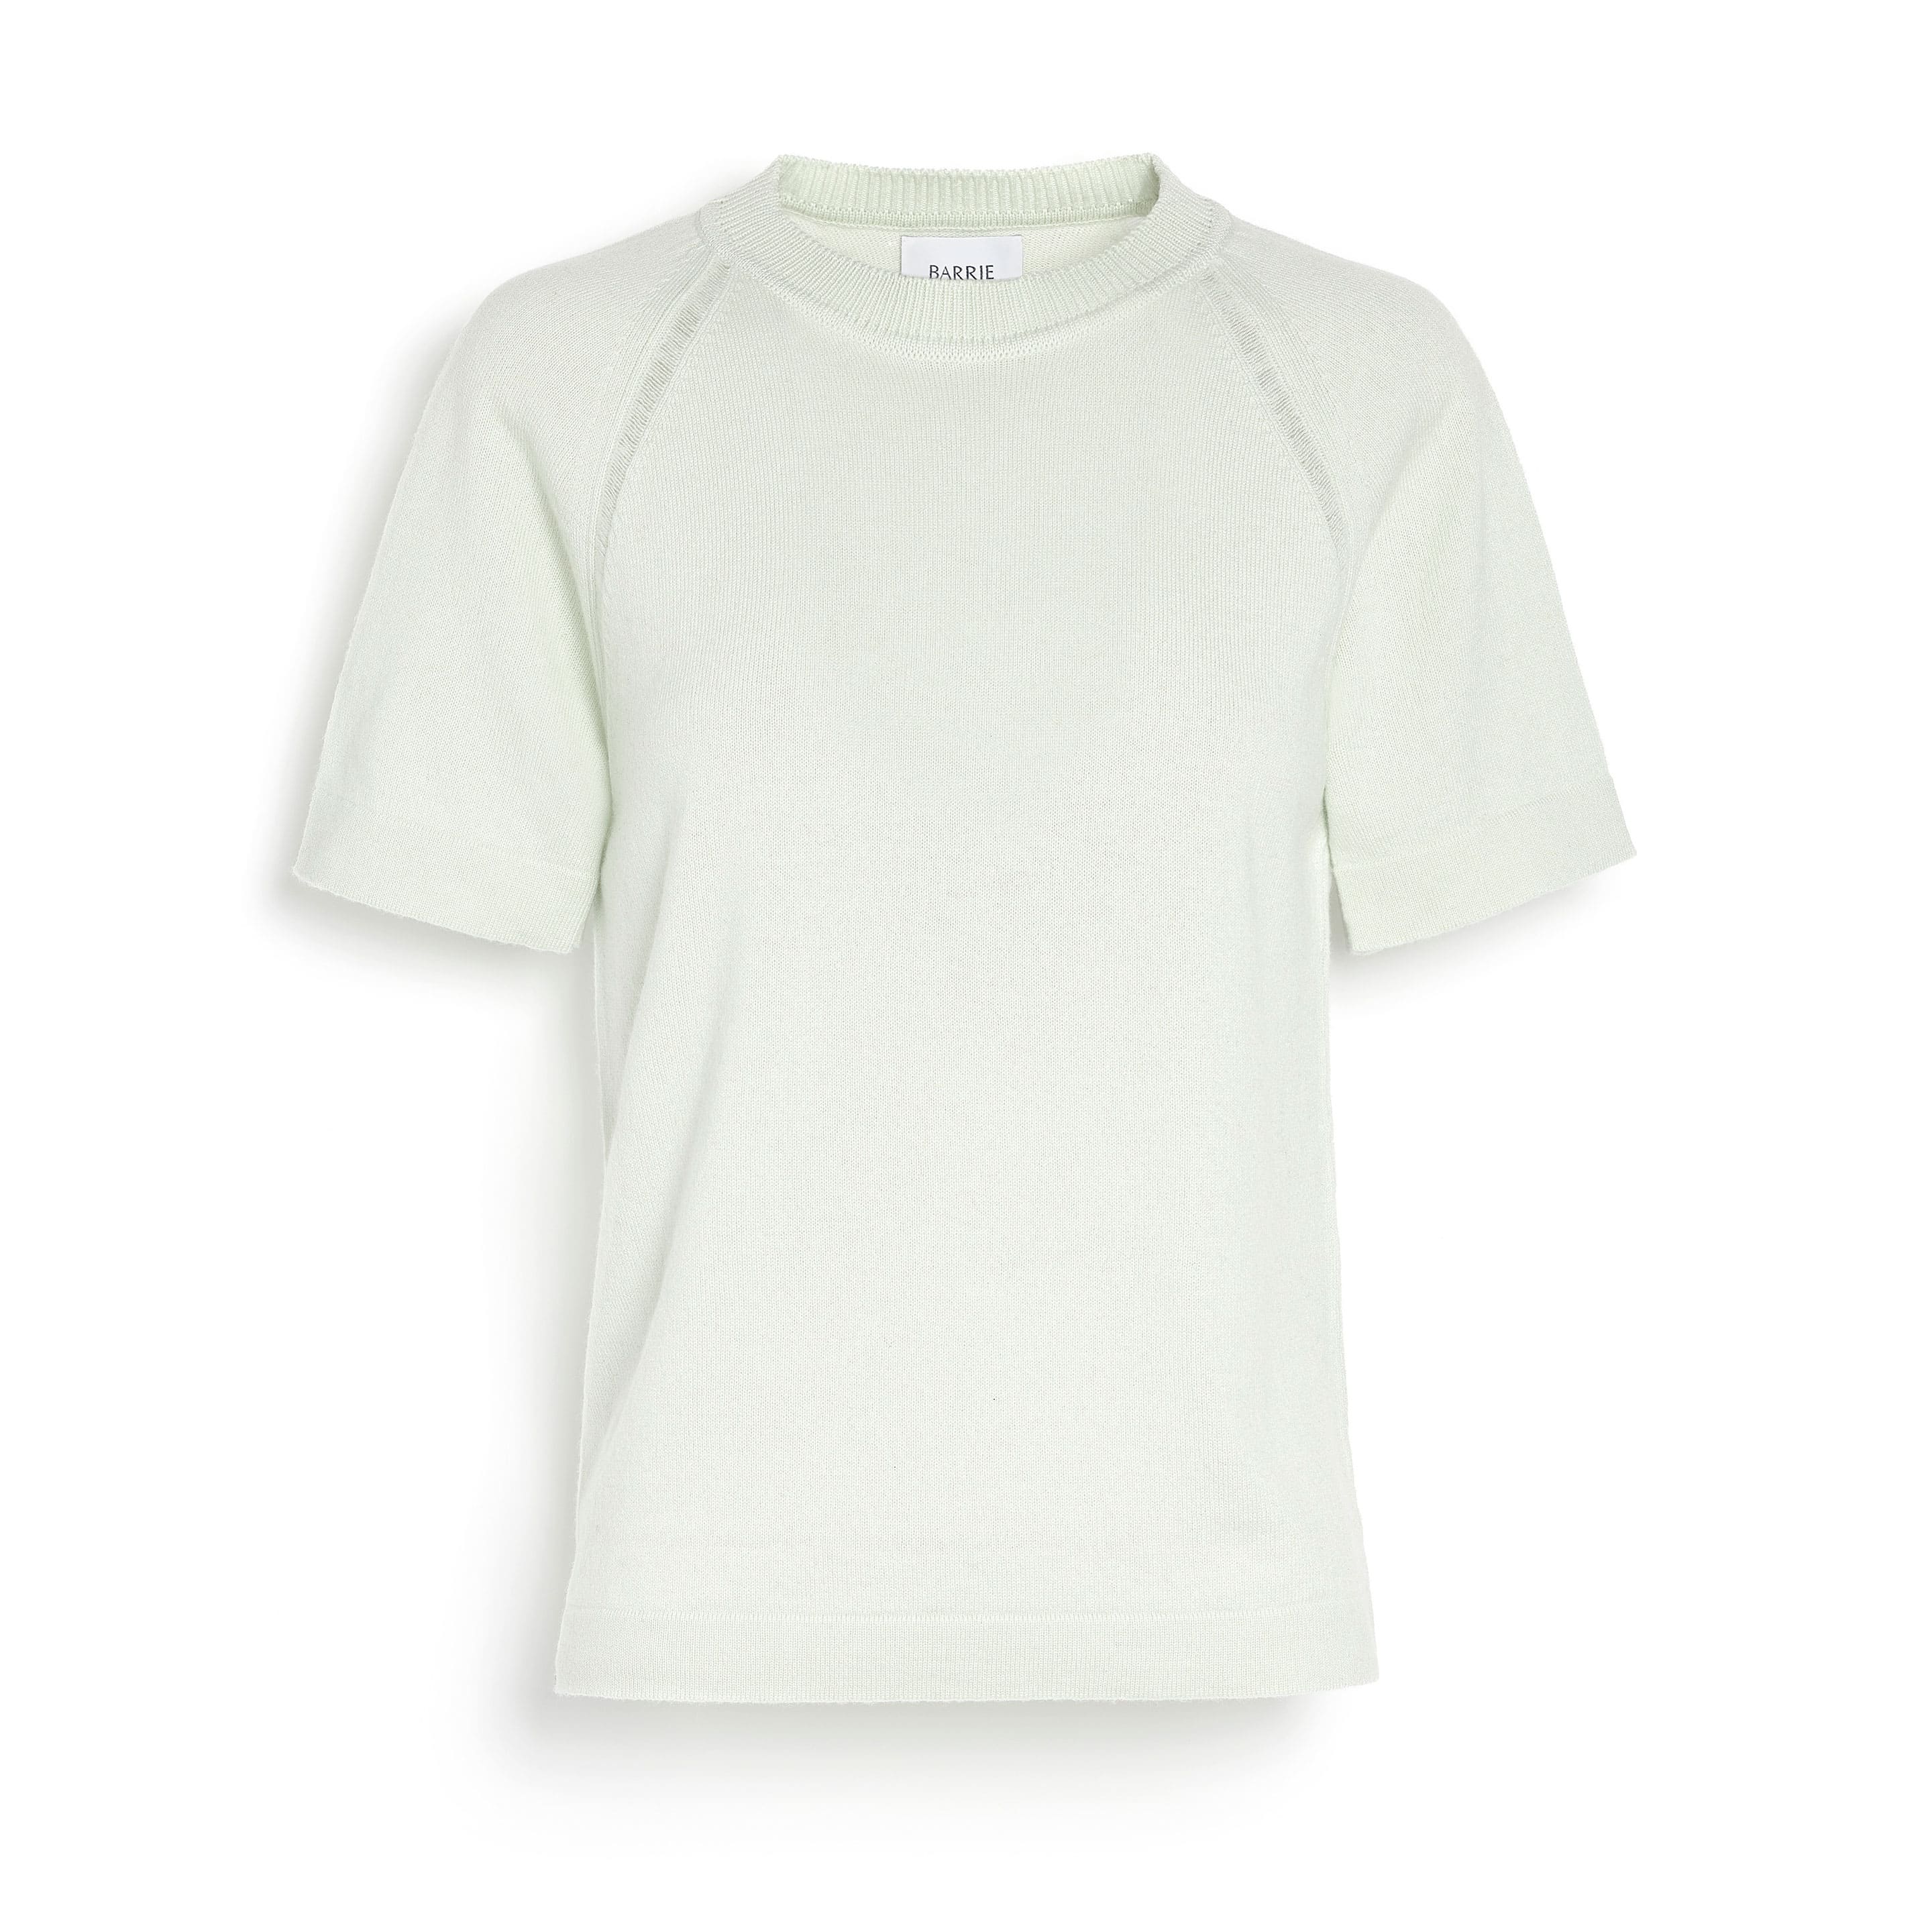 Barrie short-sleeve cashmere top - Green